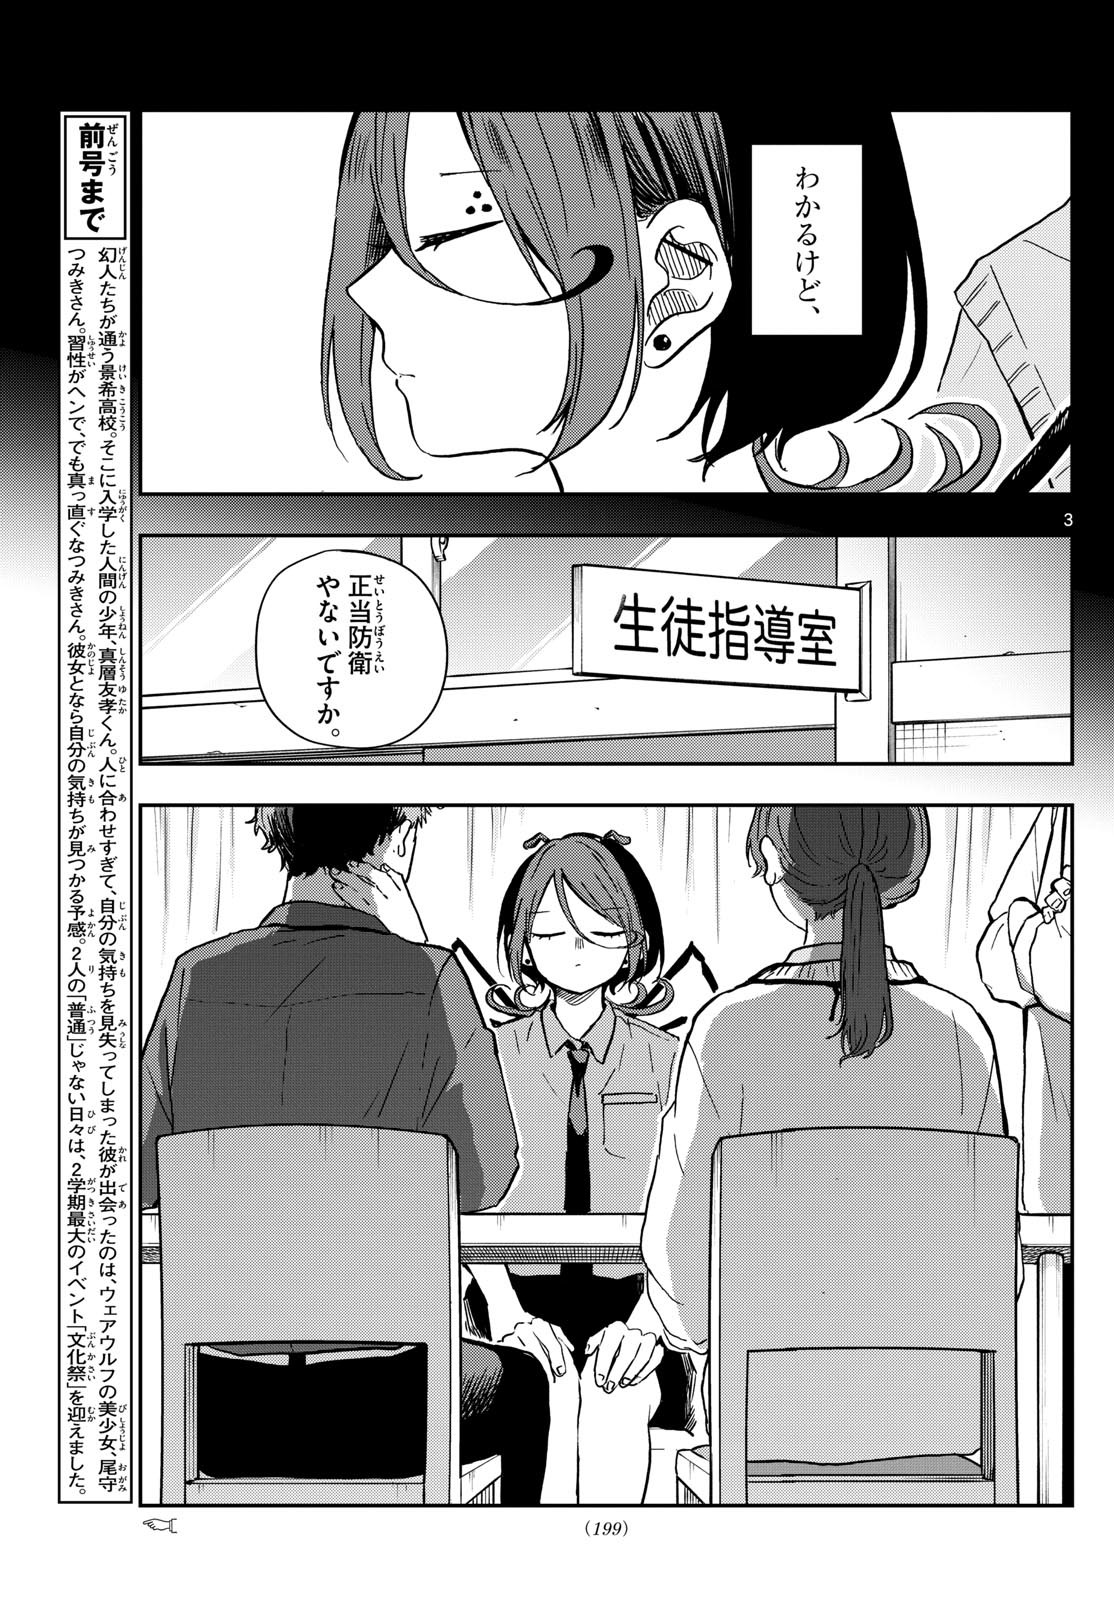 Ogami Tsumiki to Kinichijou.  - Chapter 31 - Page 3